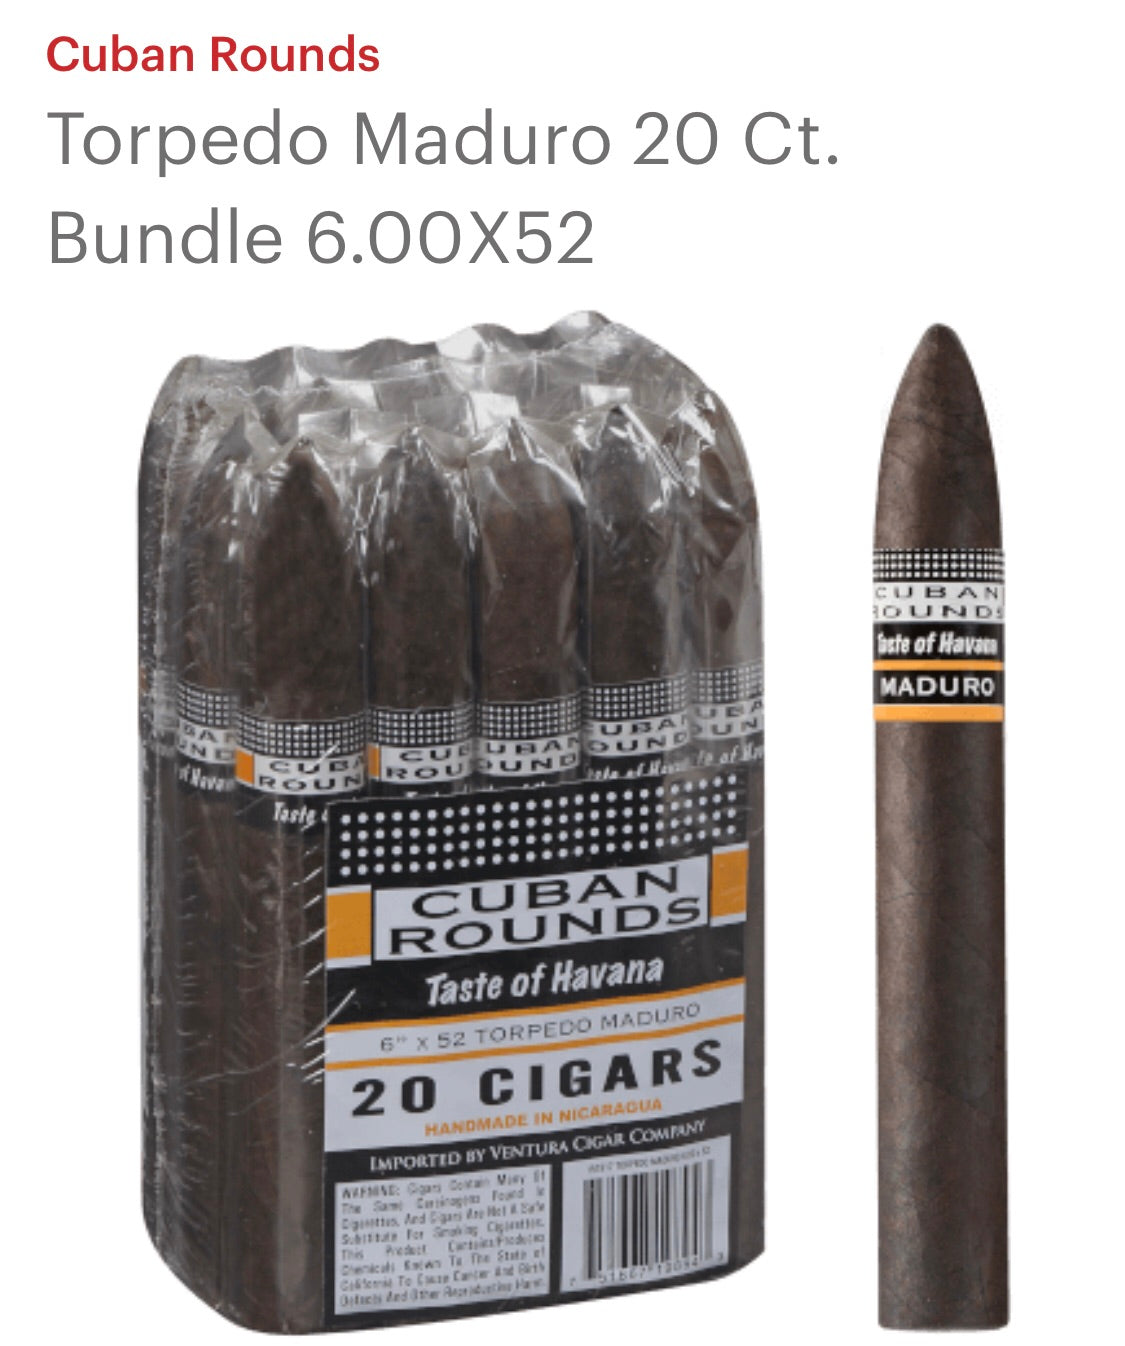 CUBAN ROUNDS TORPEDO MADURO  20 CT.. BUNDLE 6.00X52